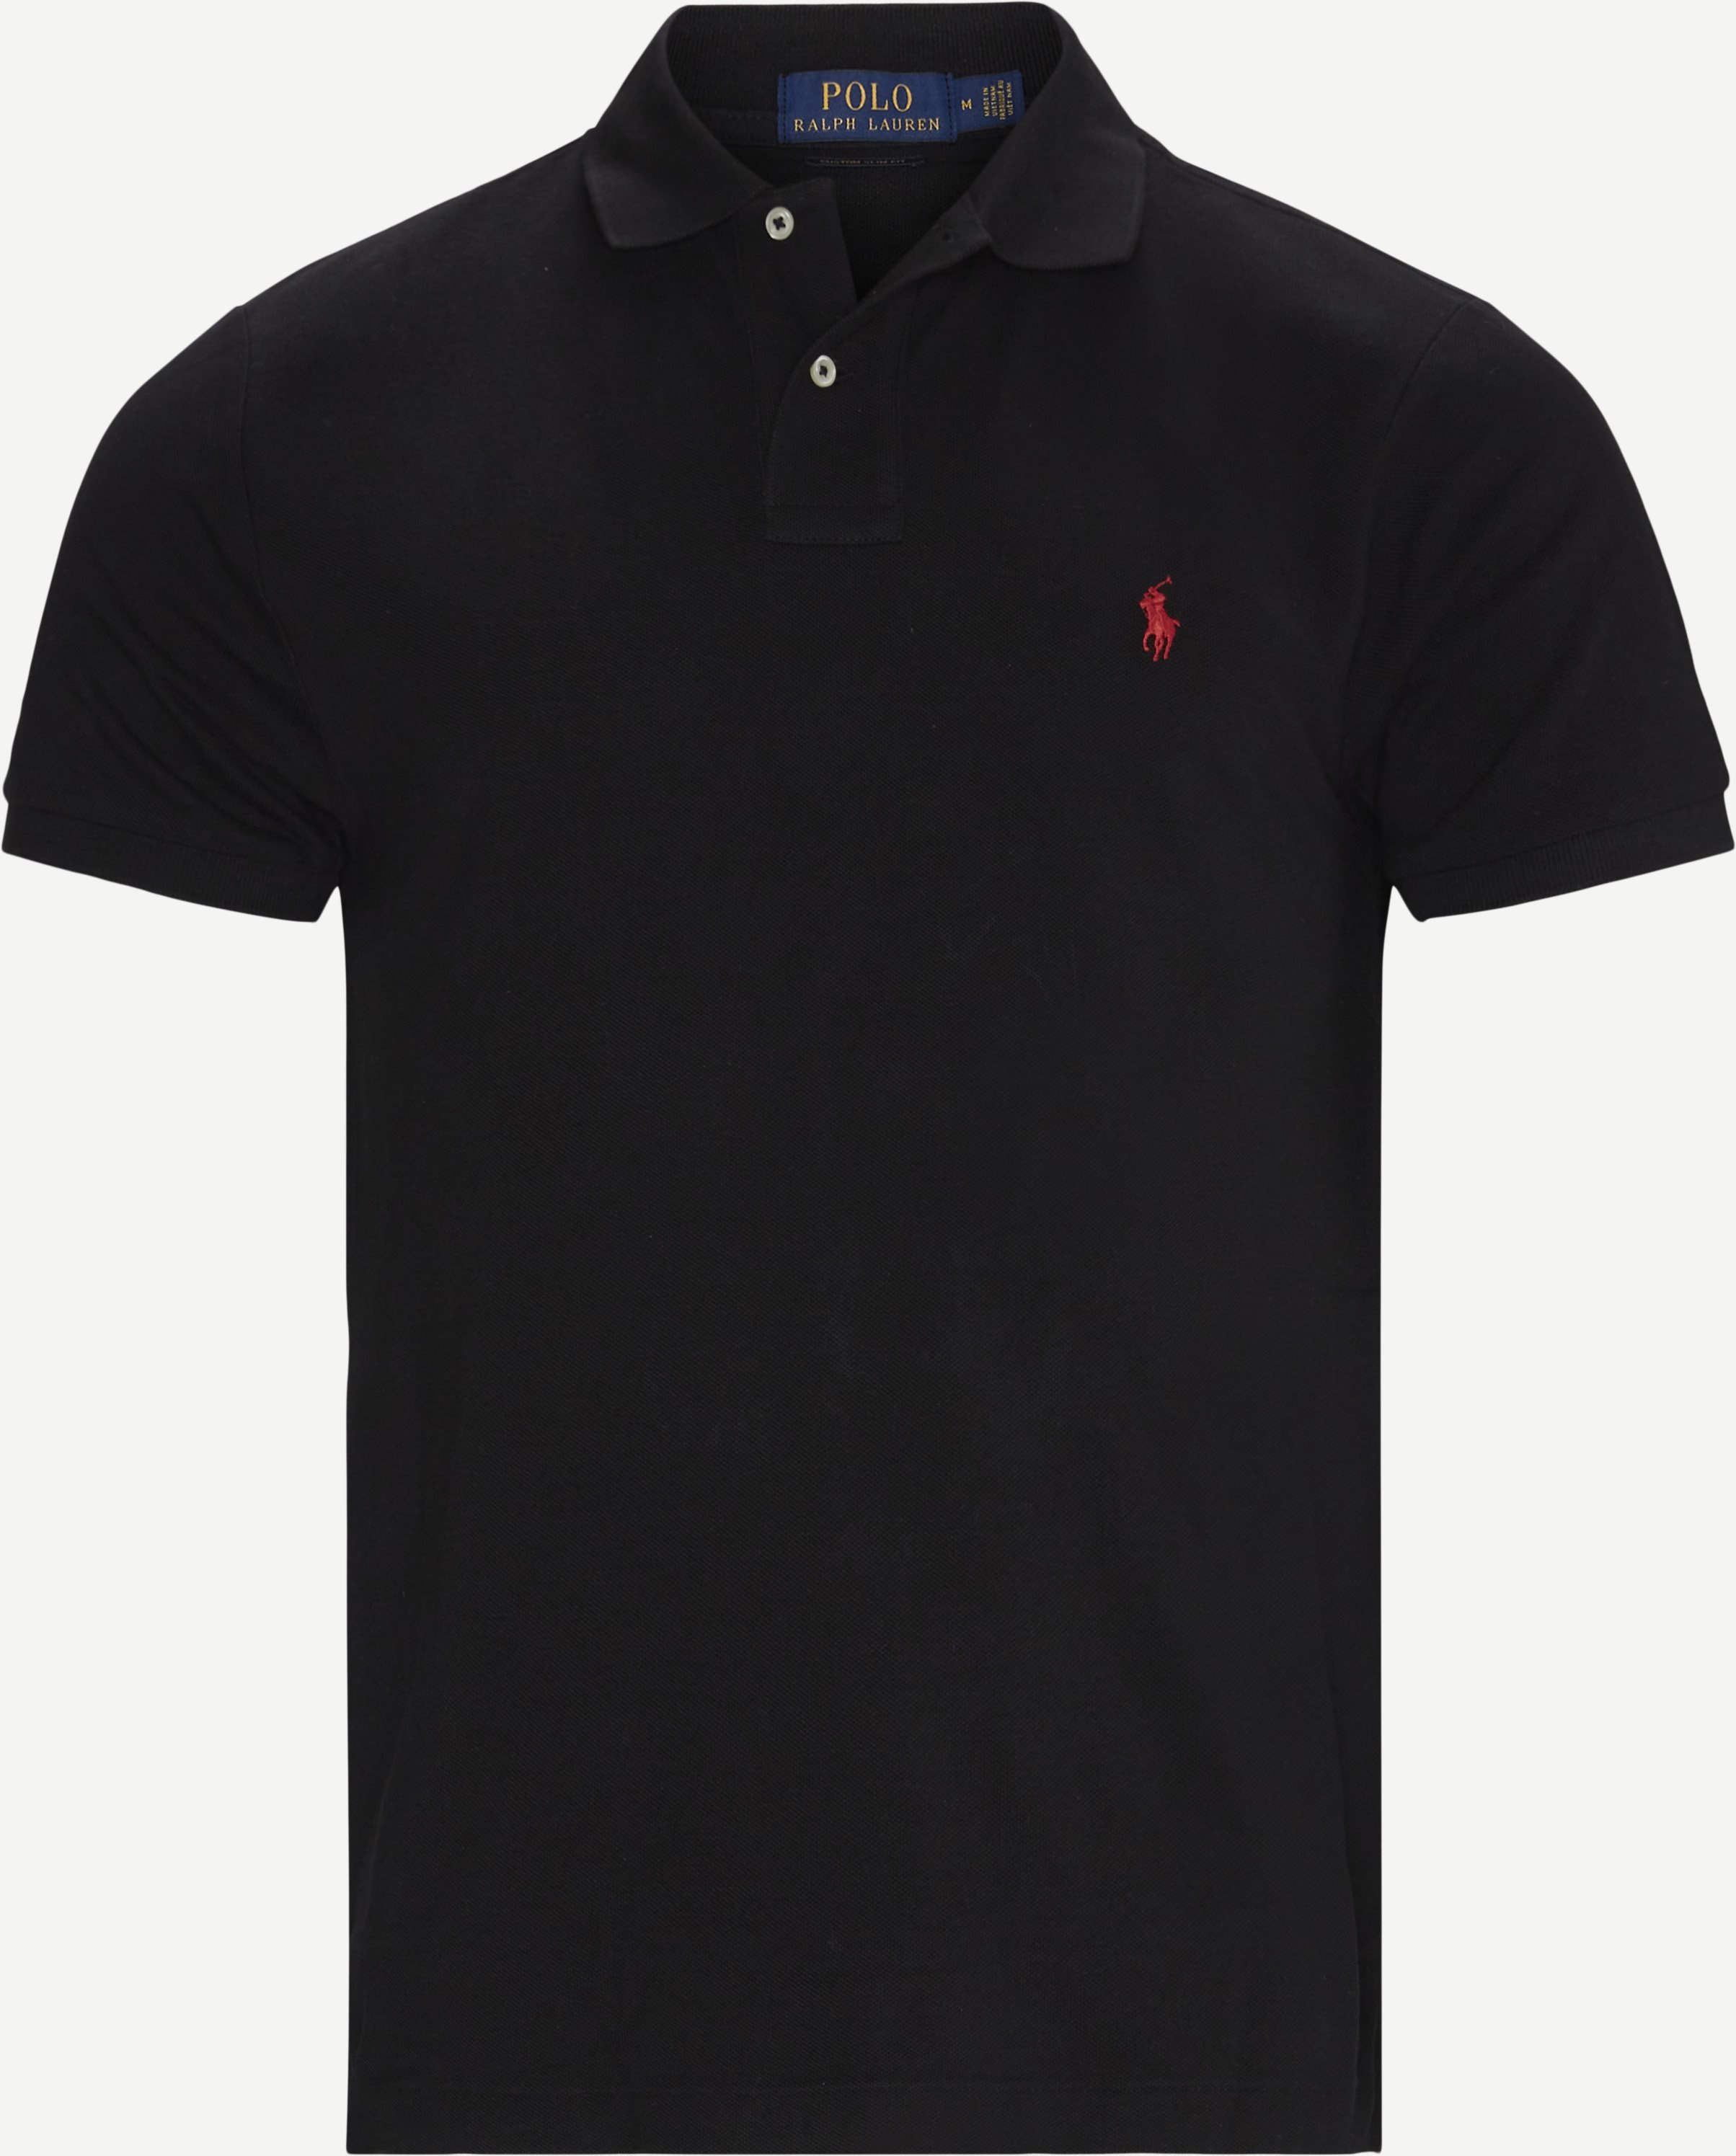 Polo Ralph Lauren T-shirts 710782592. Black